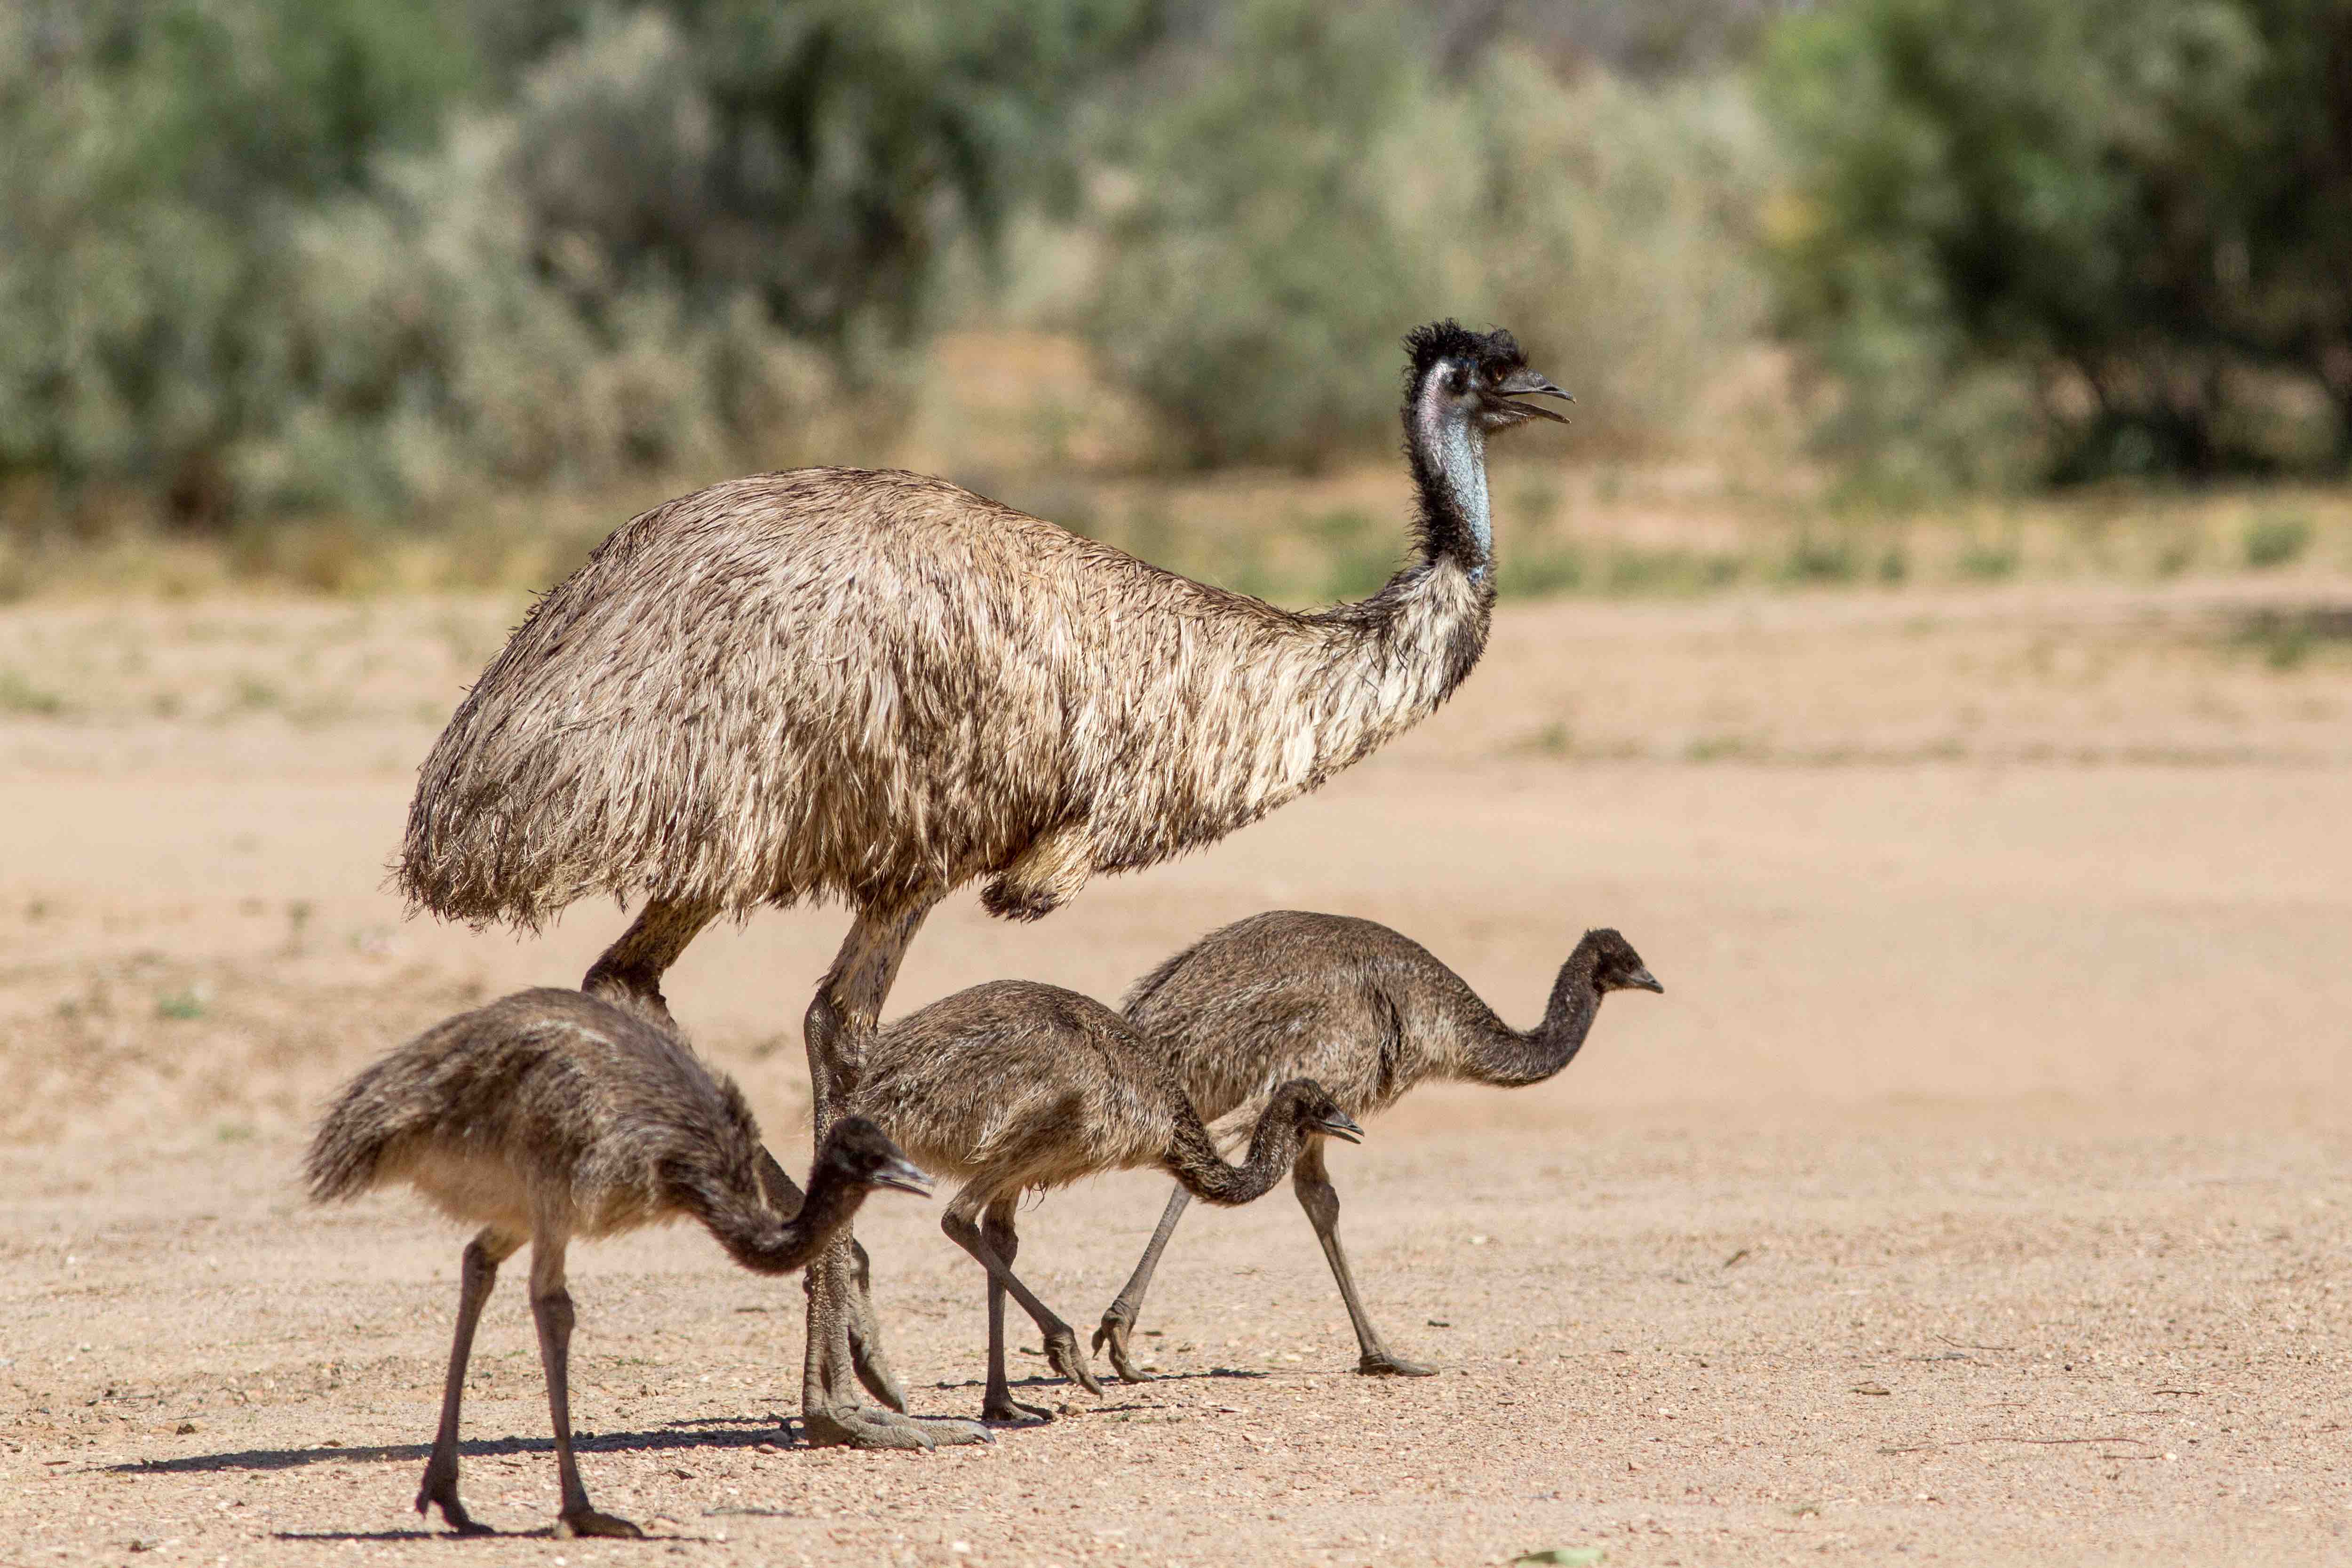 40 Emu Facts About Australia's Favorite Bird | Facts.net